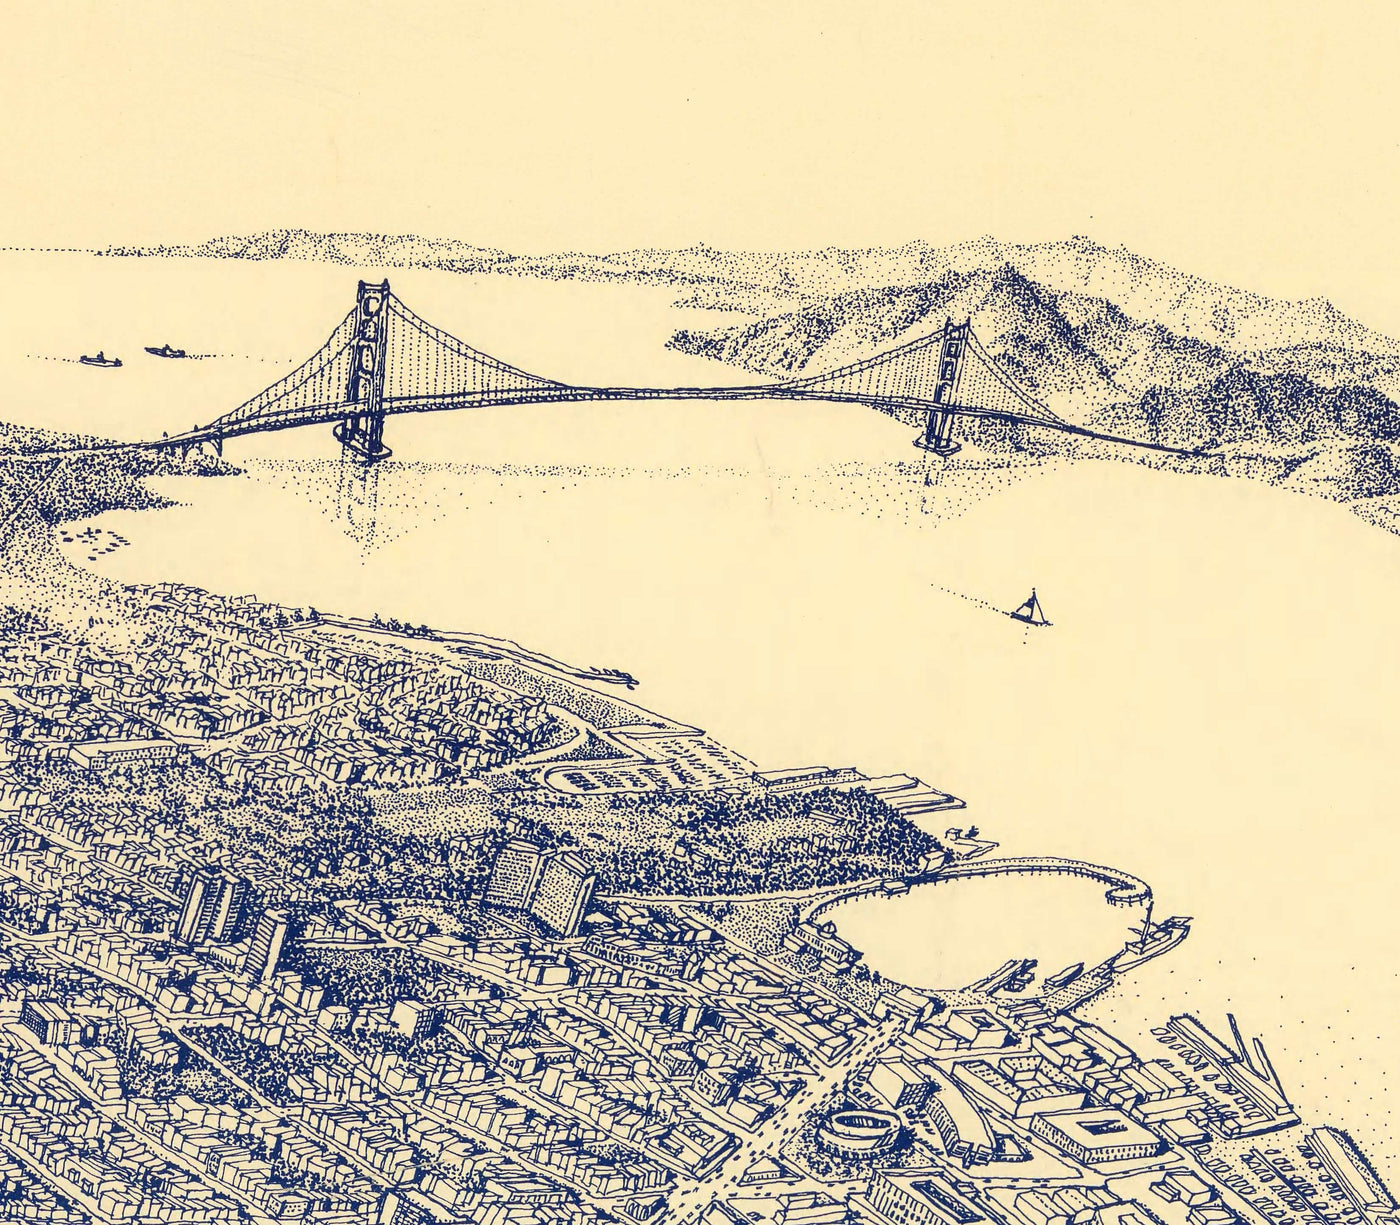 Old Birds Eye Map of San Francisco in 1982 - Skyscrapers, Bay Area, Golden Gate Bridge, Financial District, Nob Hill